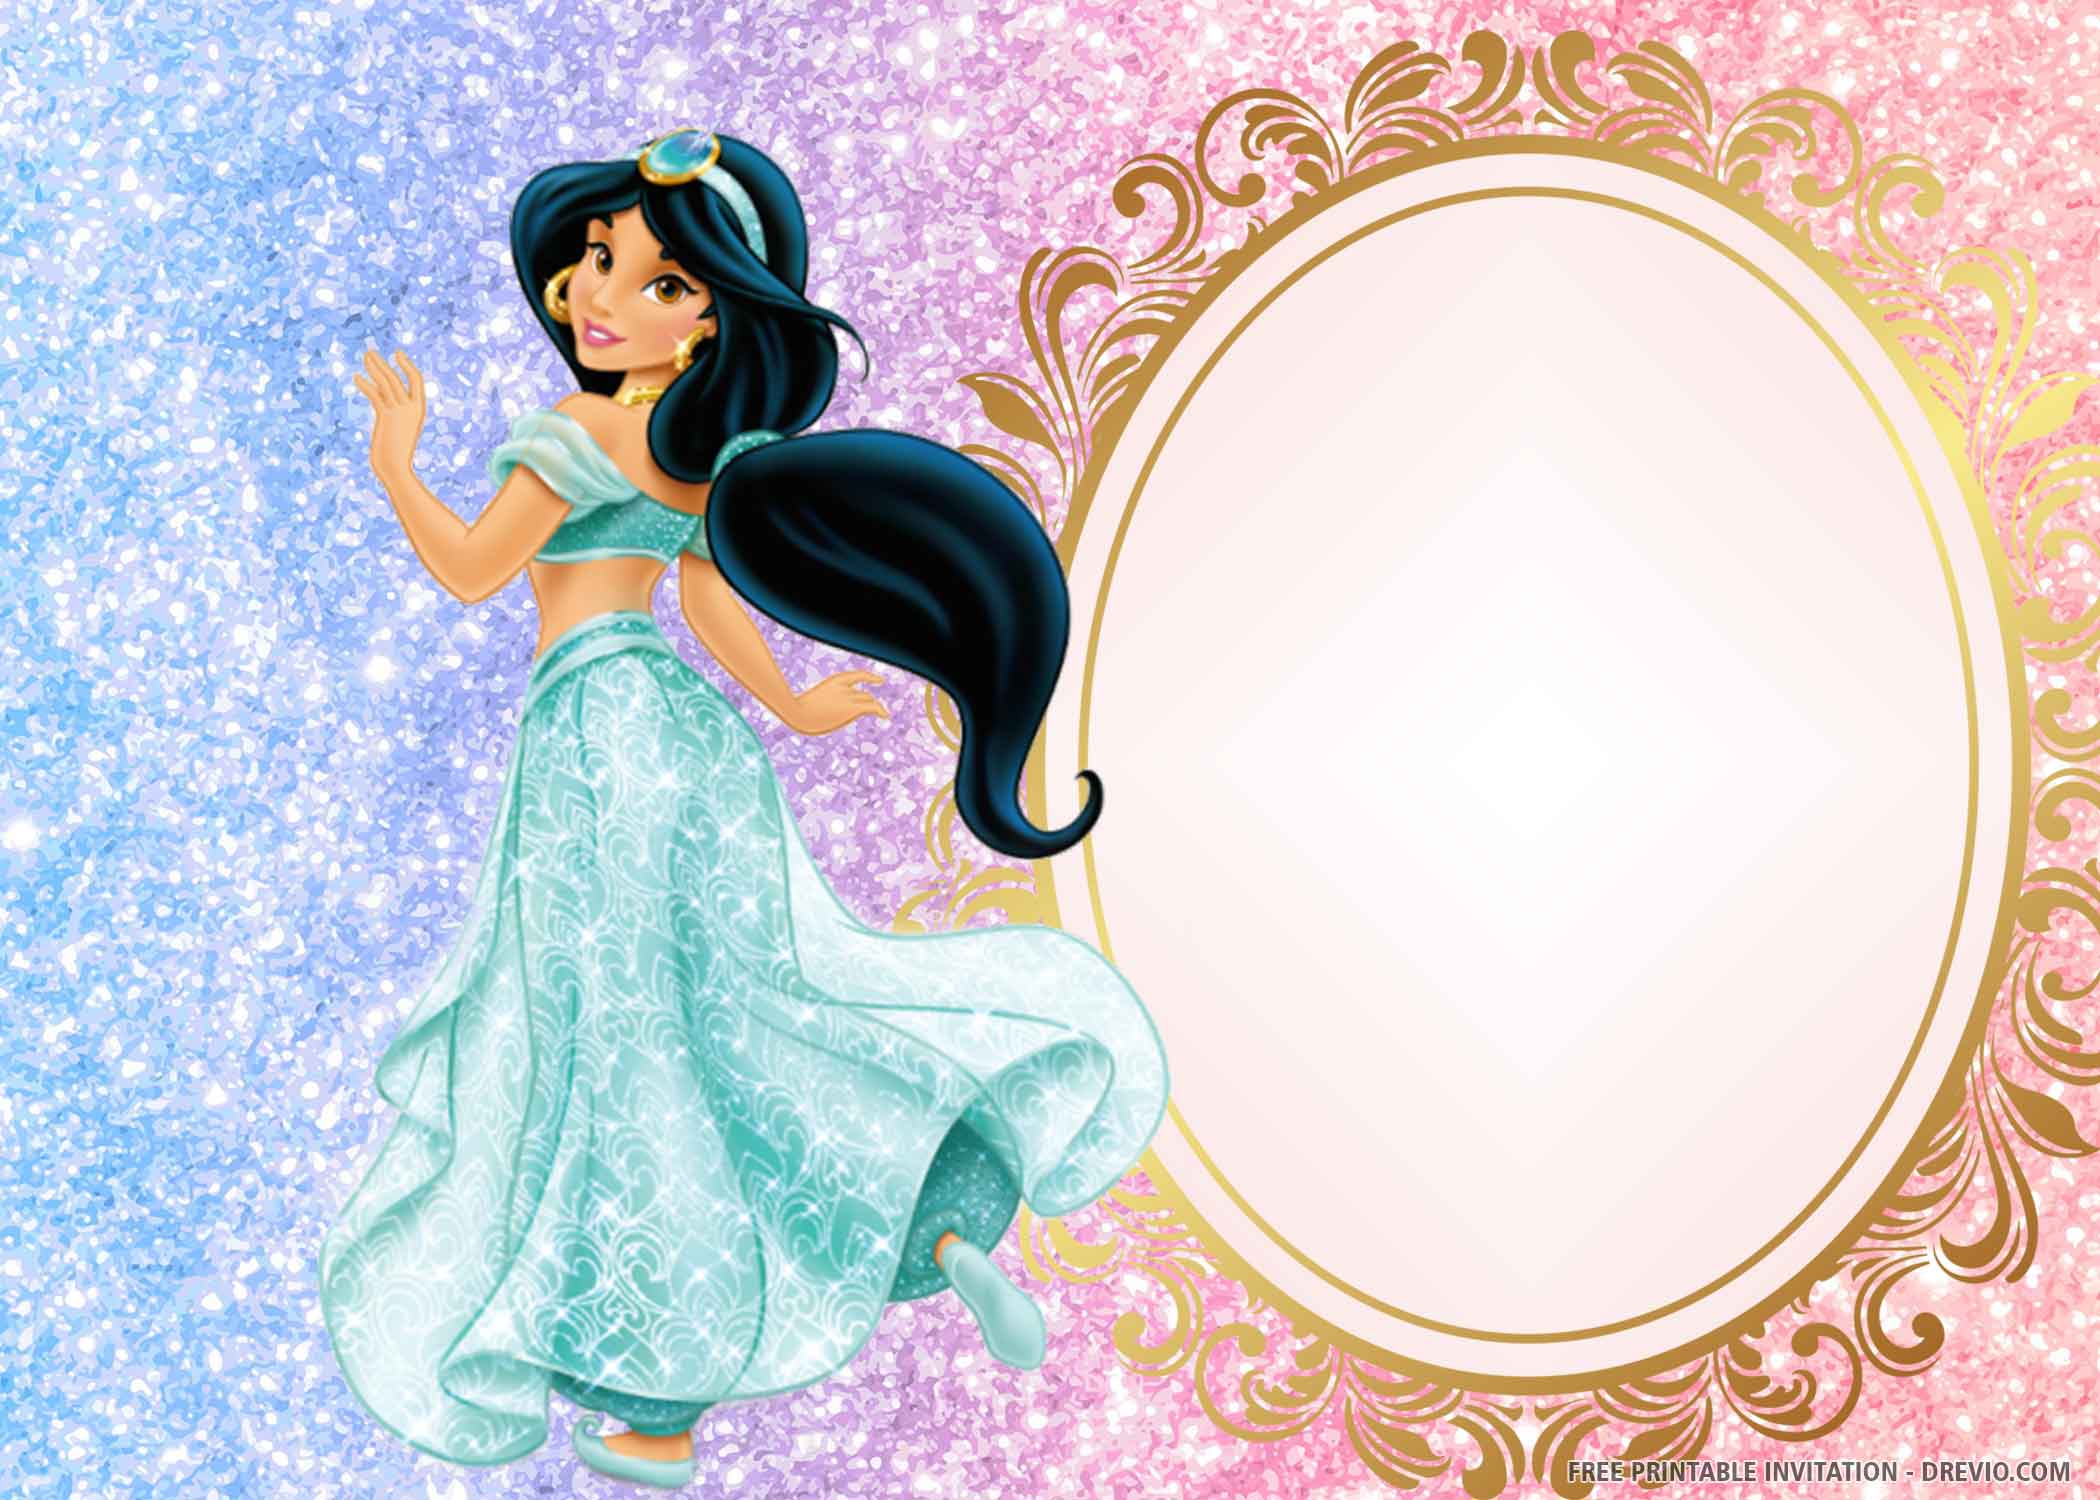 Download (FREE PRINTABLE) - Princess Jasmine Birthday Invitation ...